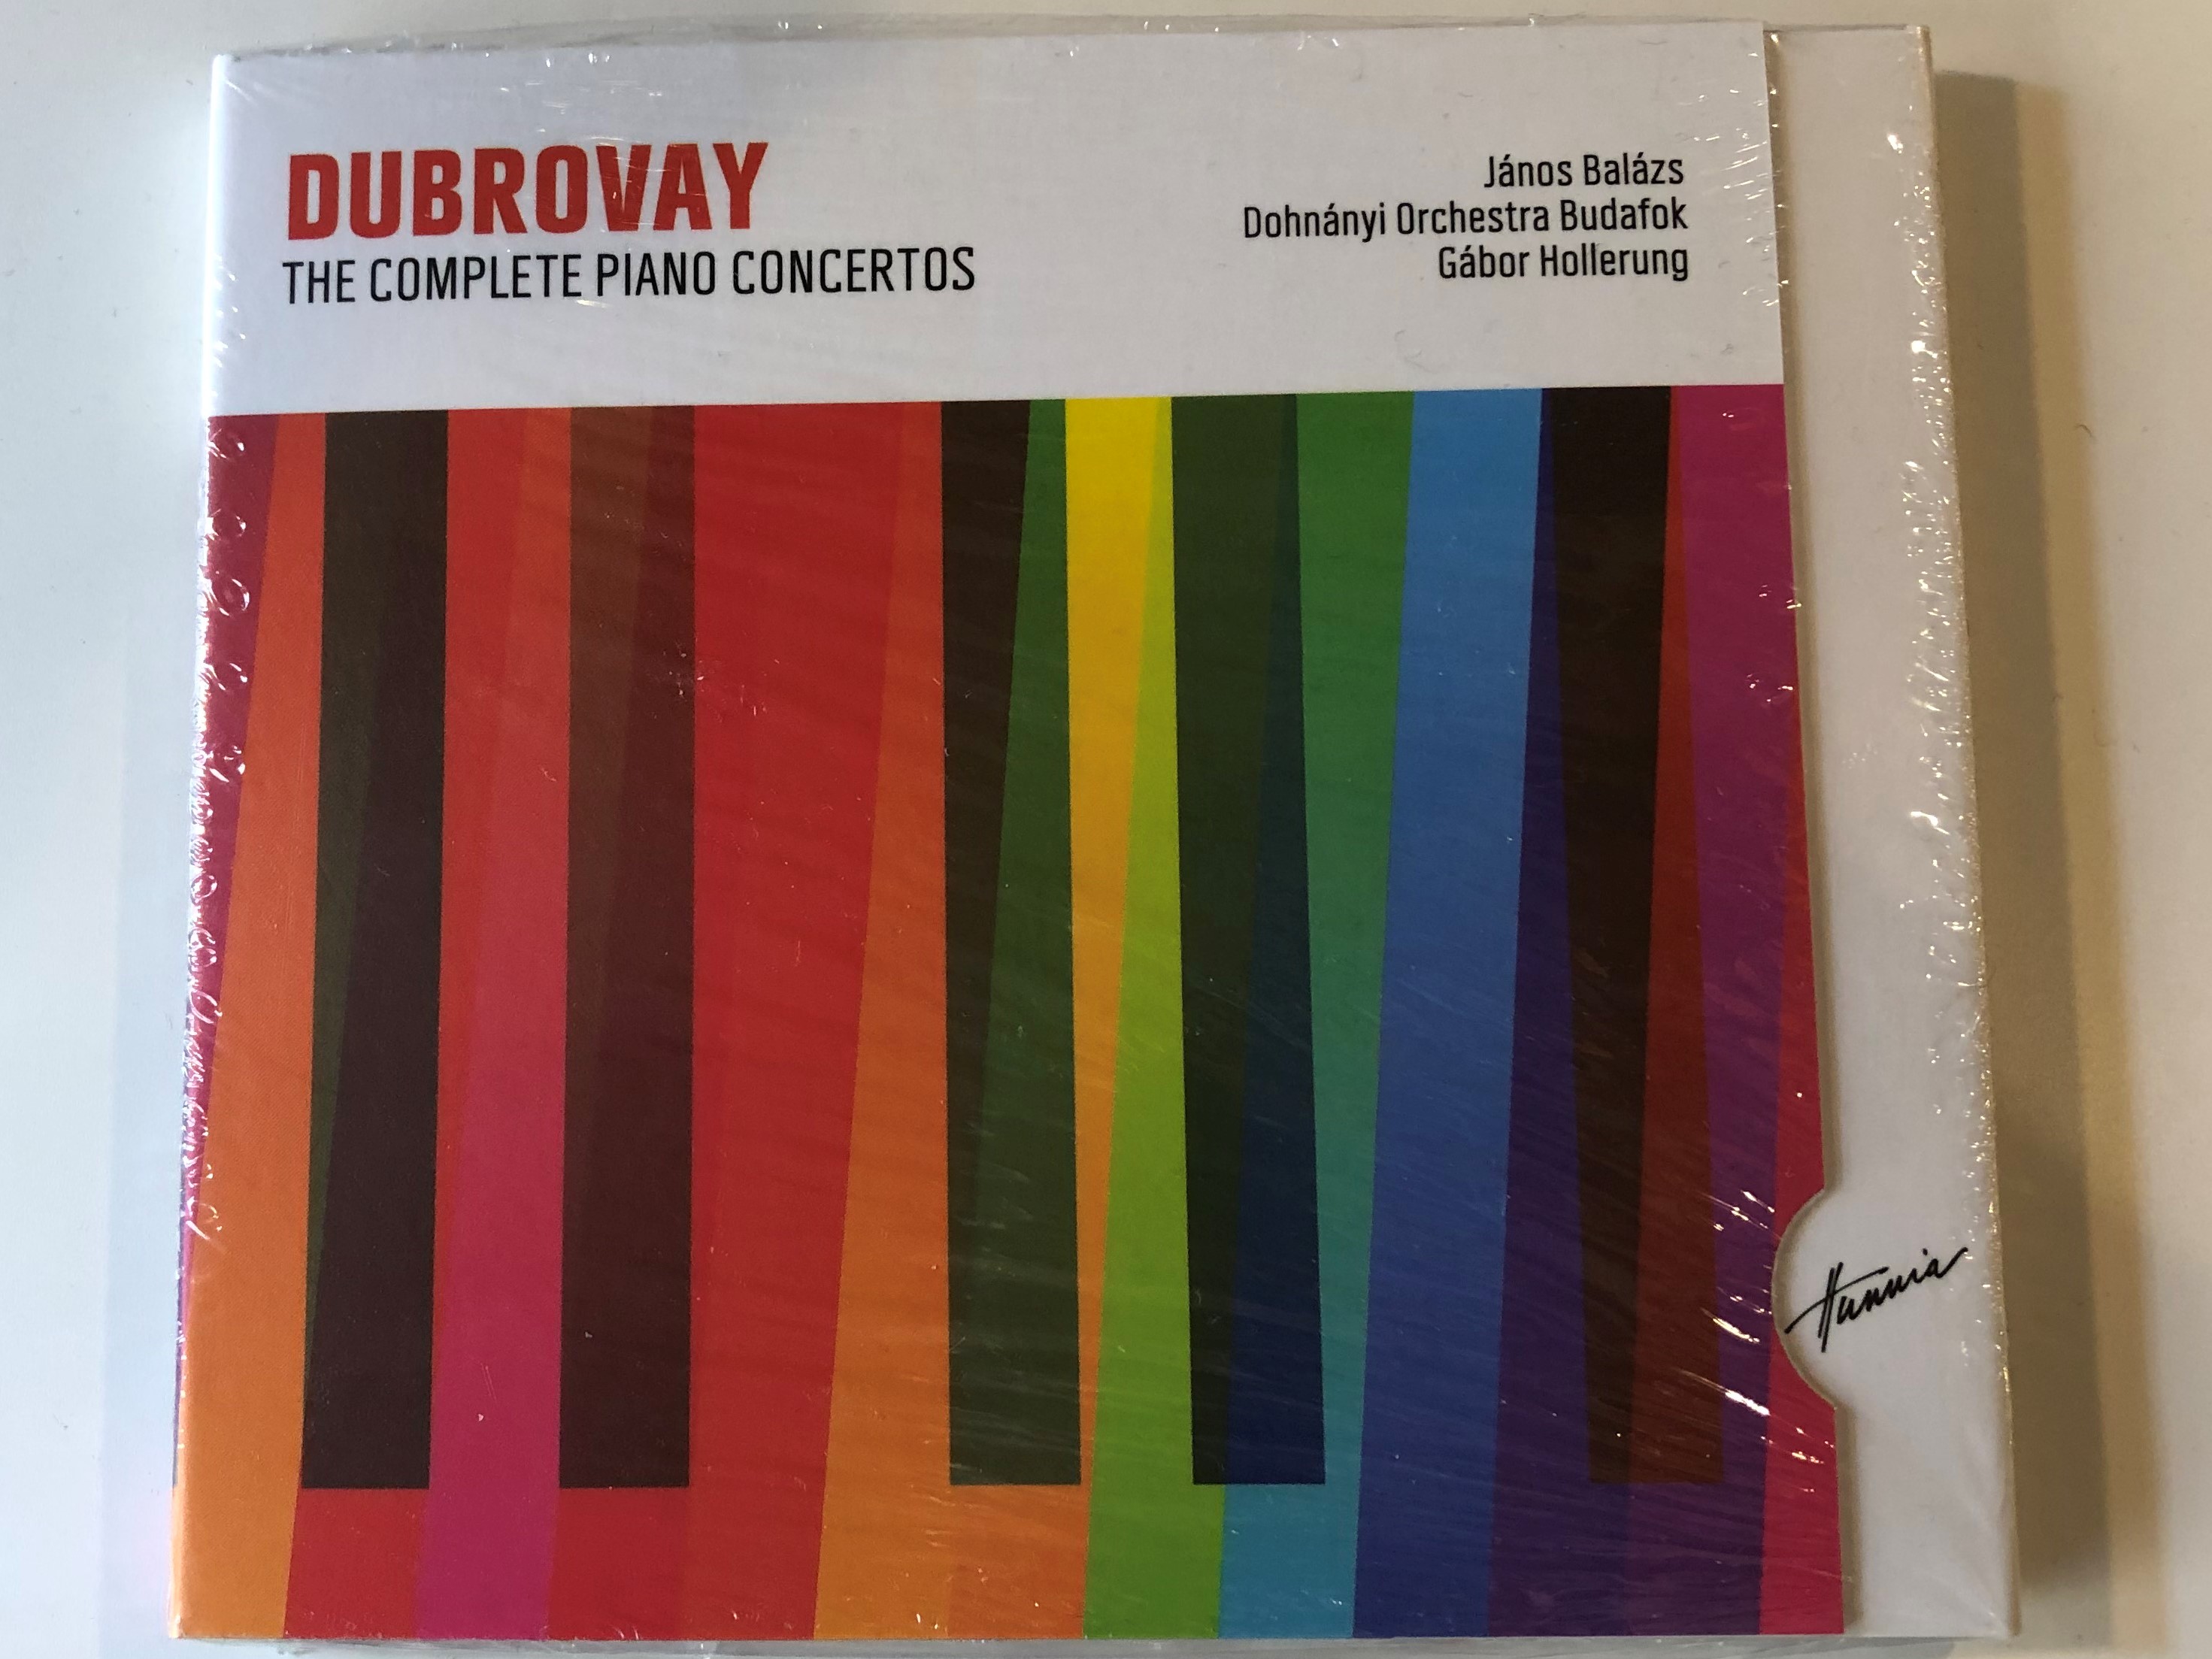 dubrovay-the-complete-piano-concertos-janos-balazs-dohnanyi-orchestra-budafok-gabor-hollerung-hunnia-records-film-production-audio-cd-2017-5999883043936-1-.jpg